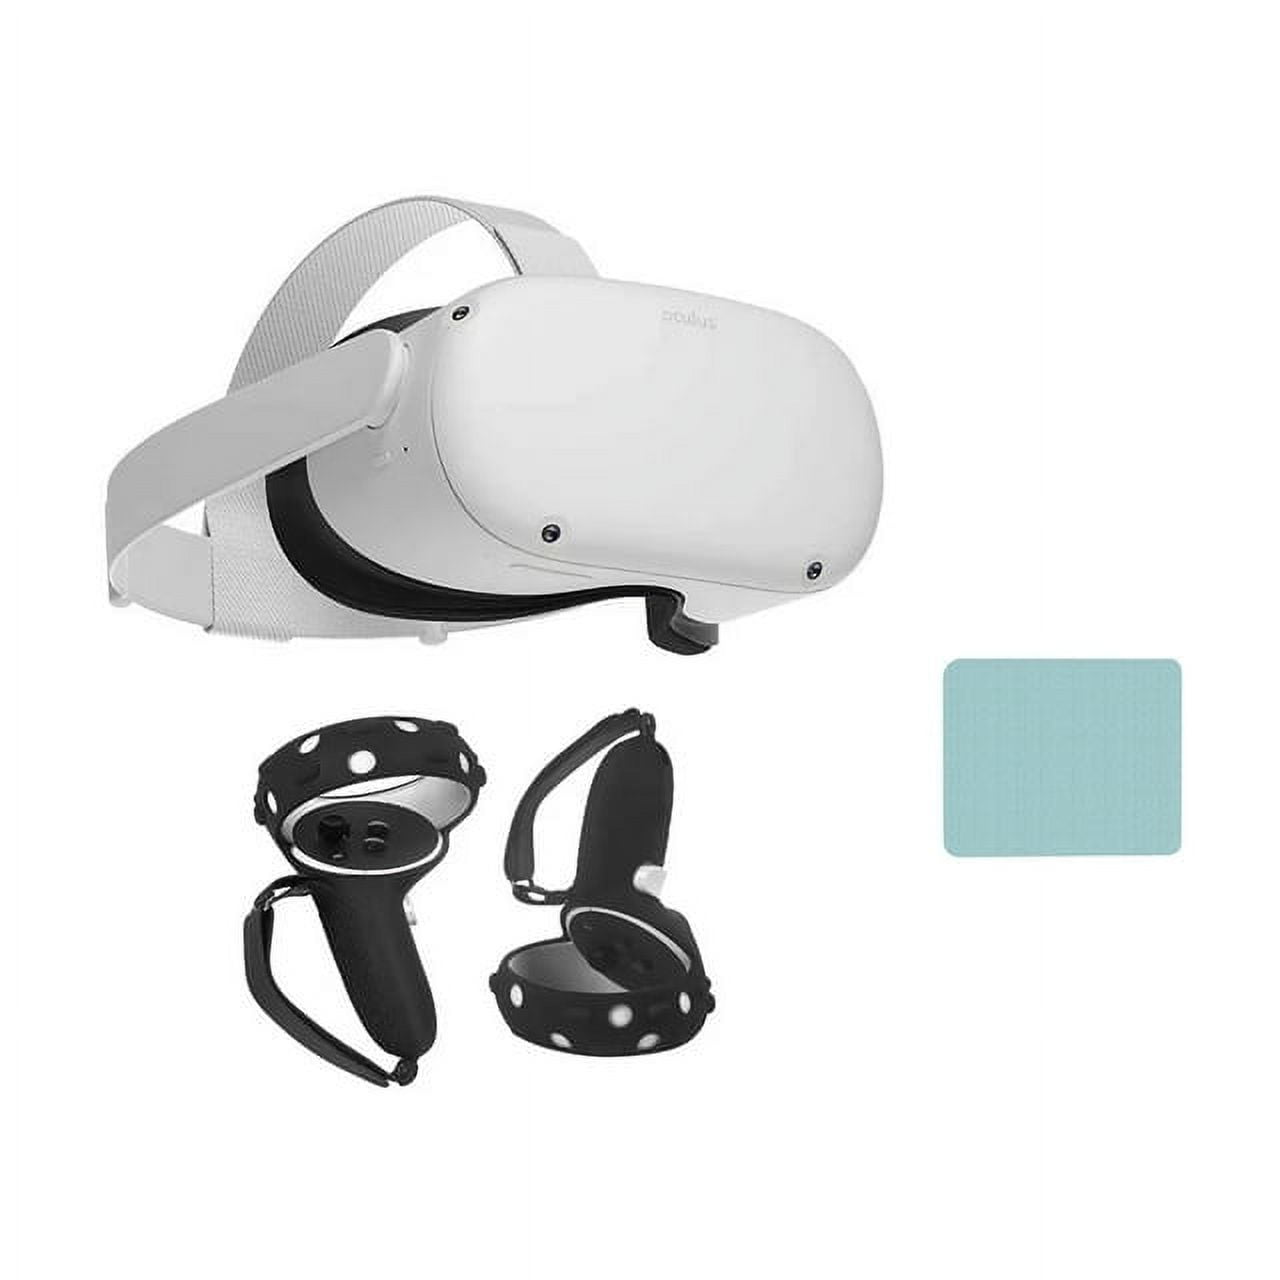 Sony PlayStation VR Starter Bundle 